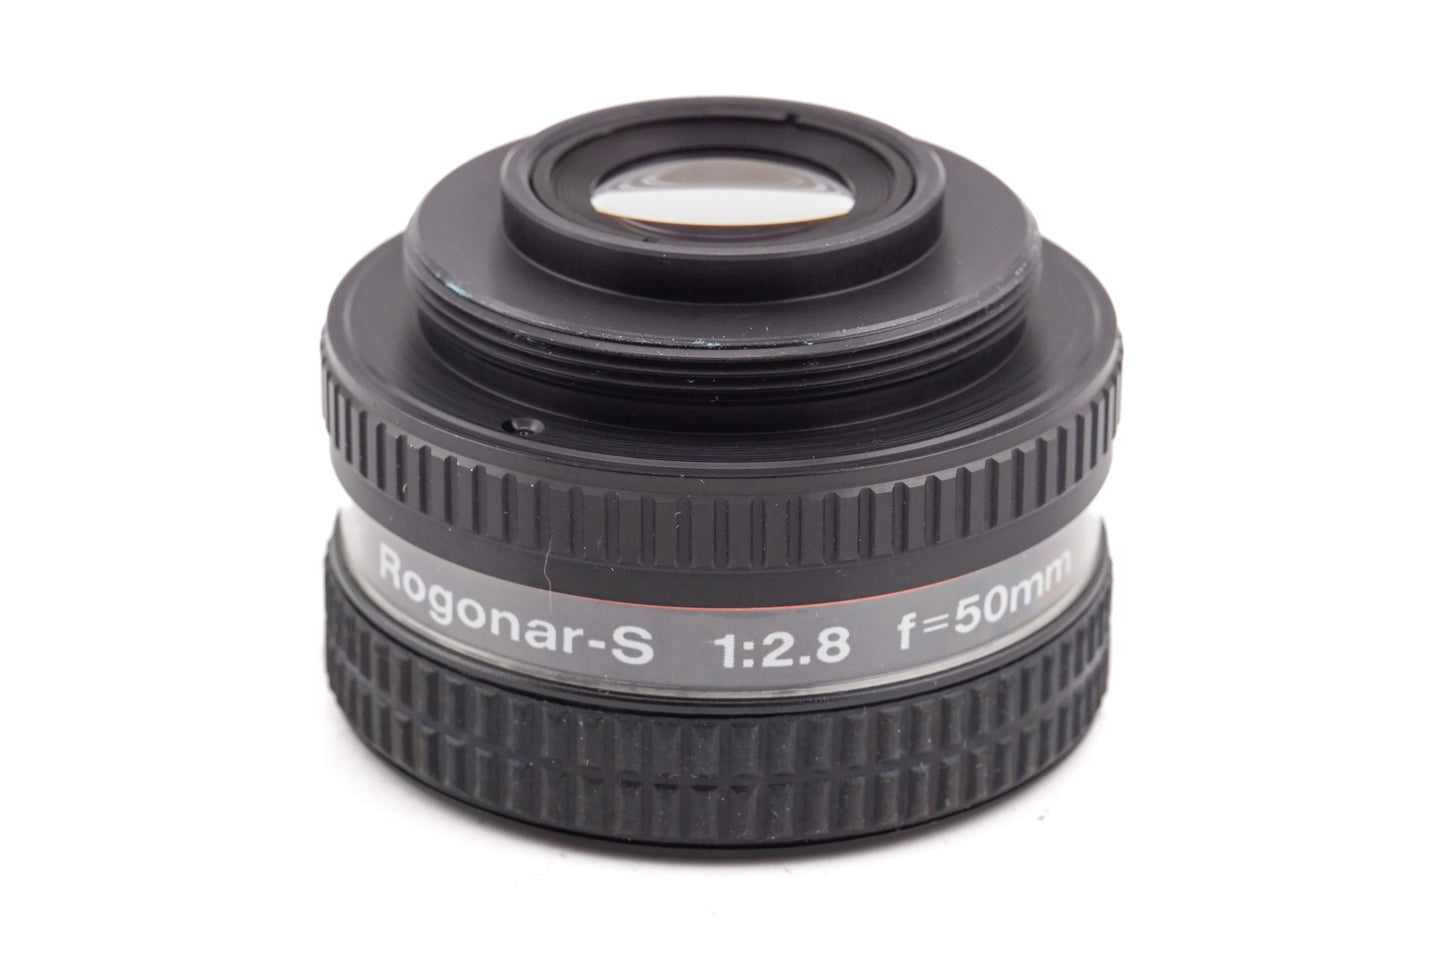 Rodenstock 50mm f2.8 Rogonar-S - Lens